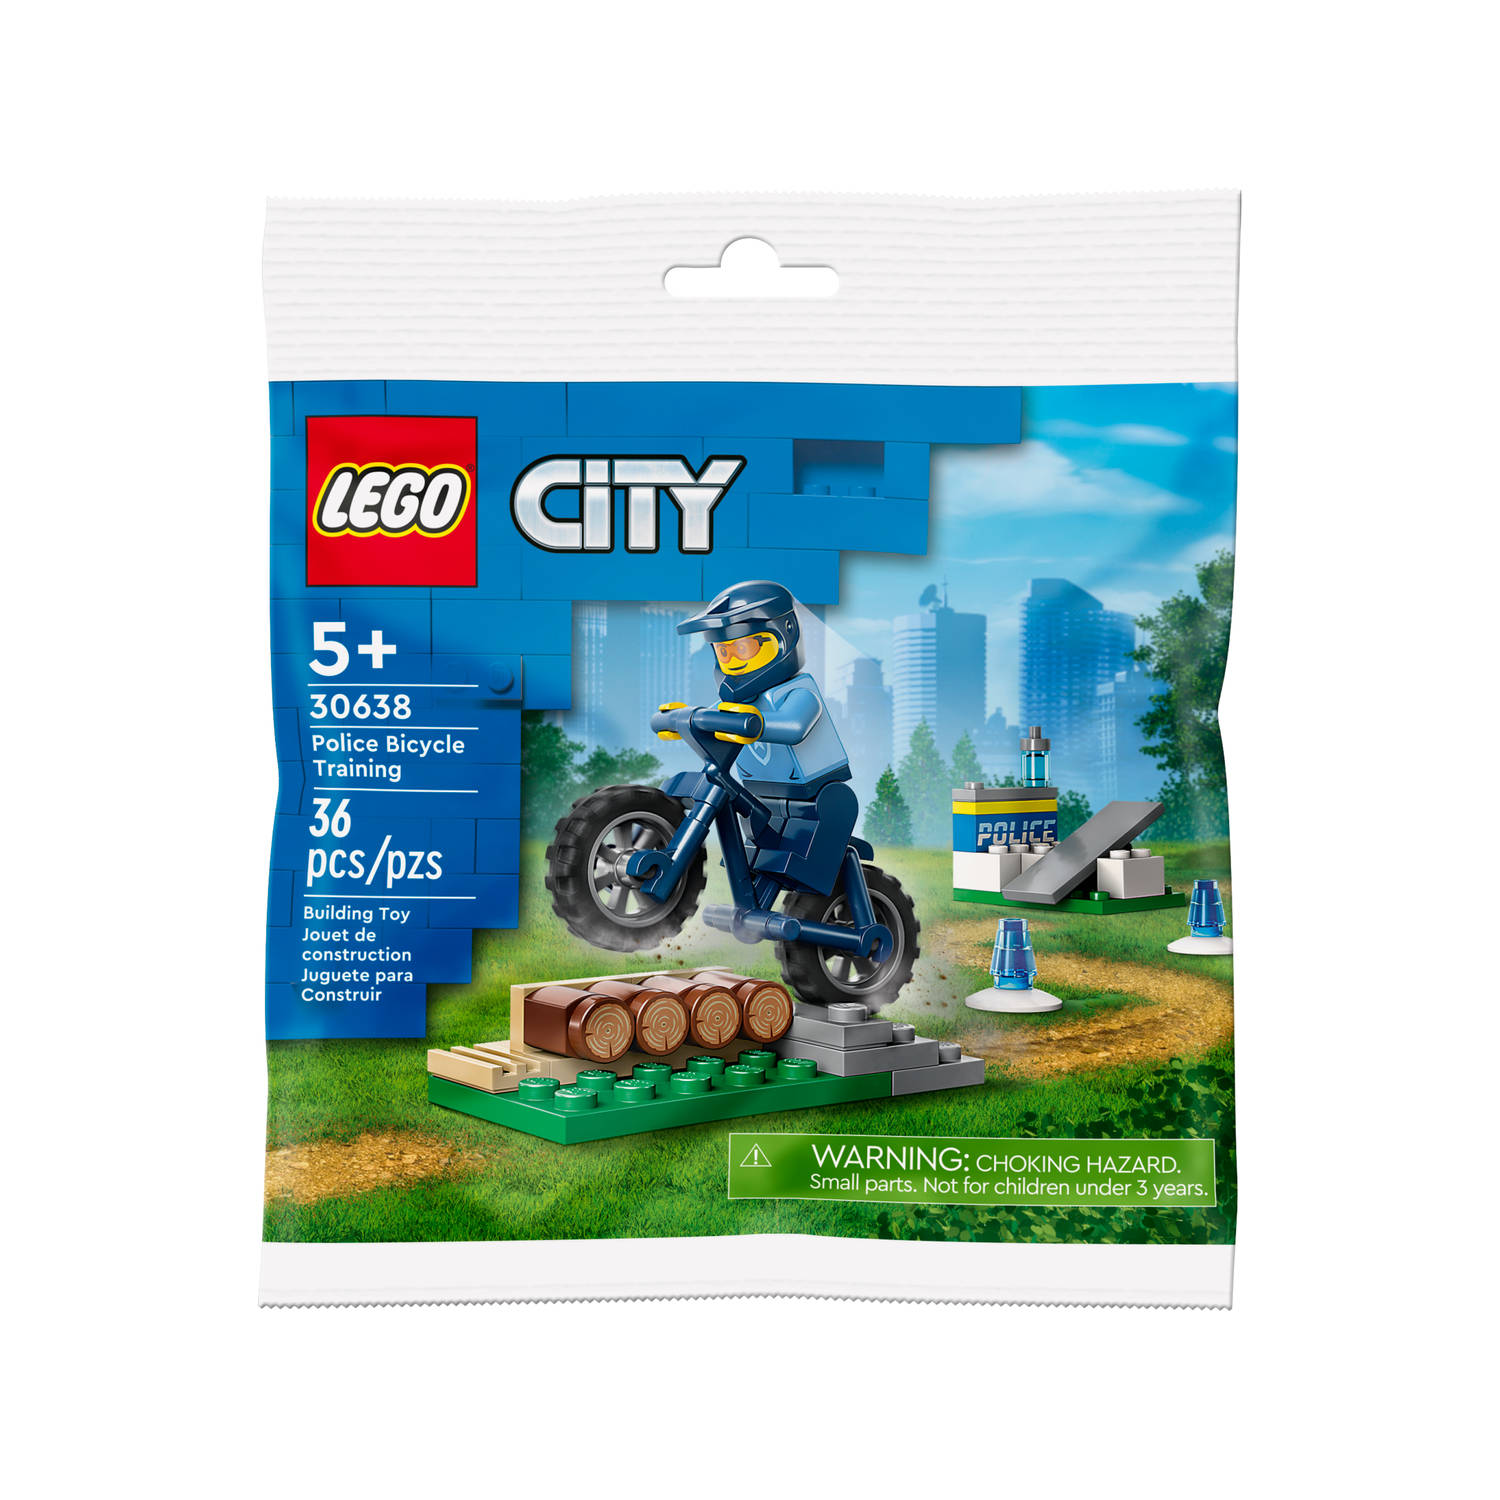 LEGOÂ® City 30638 Police Bicycle Training